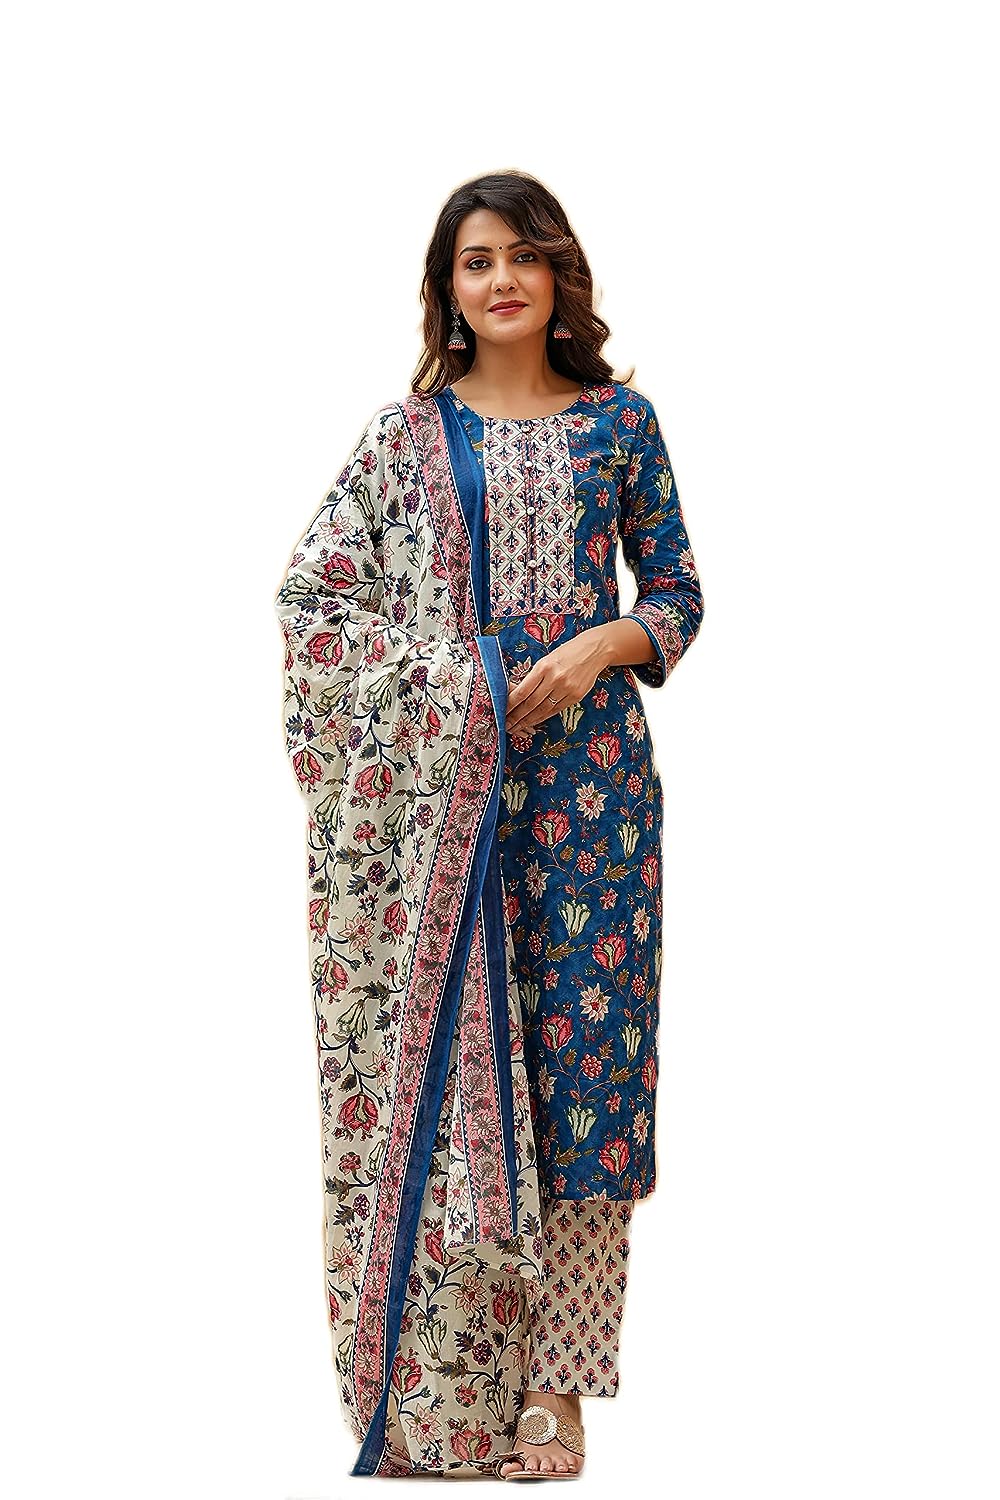 Vaamsi Women's Cotton Blend Printed Kurta Set with Dupatta (VKSKD1238_Blue)